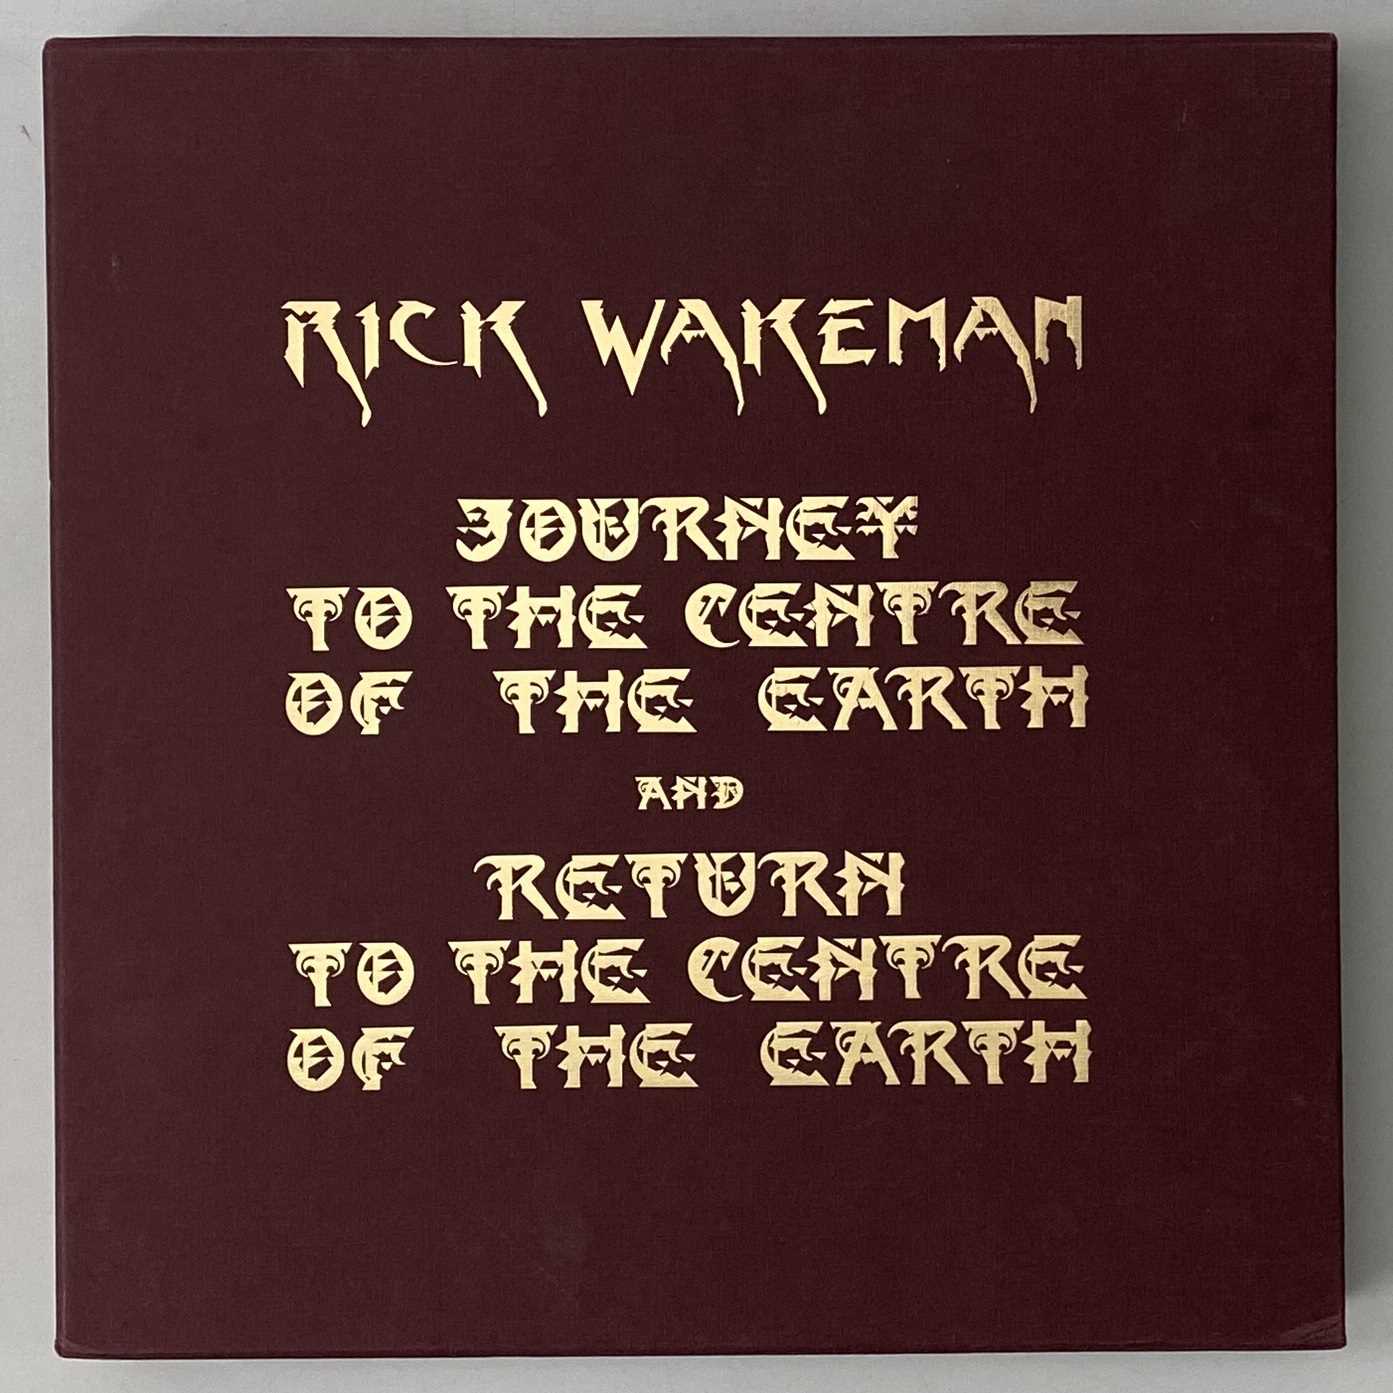 RICK WAKEMAN - LP COLLECTION - Image 3 of 6